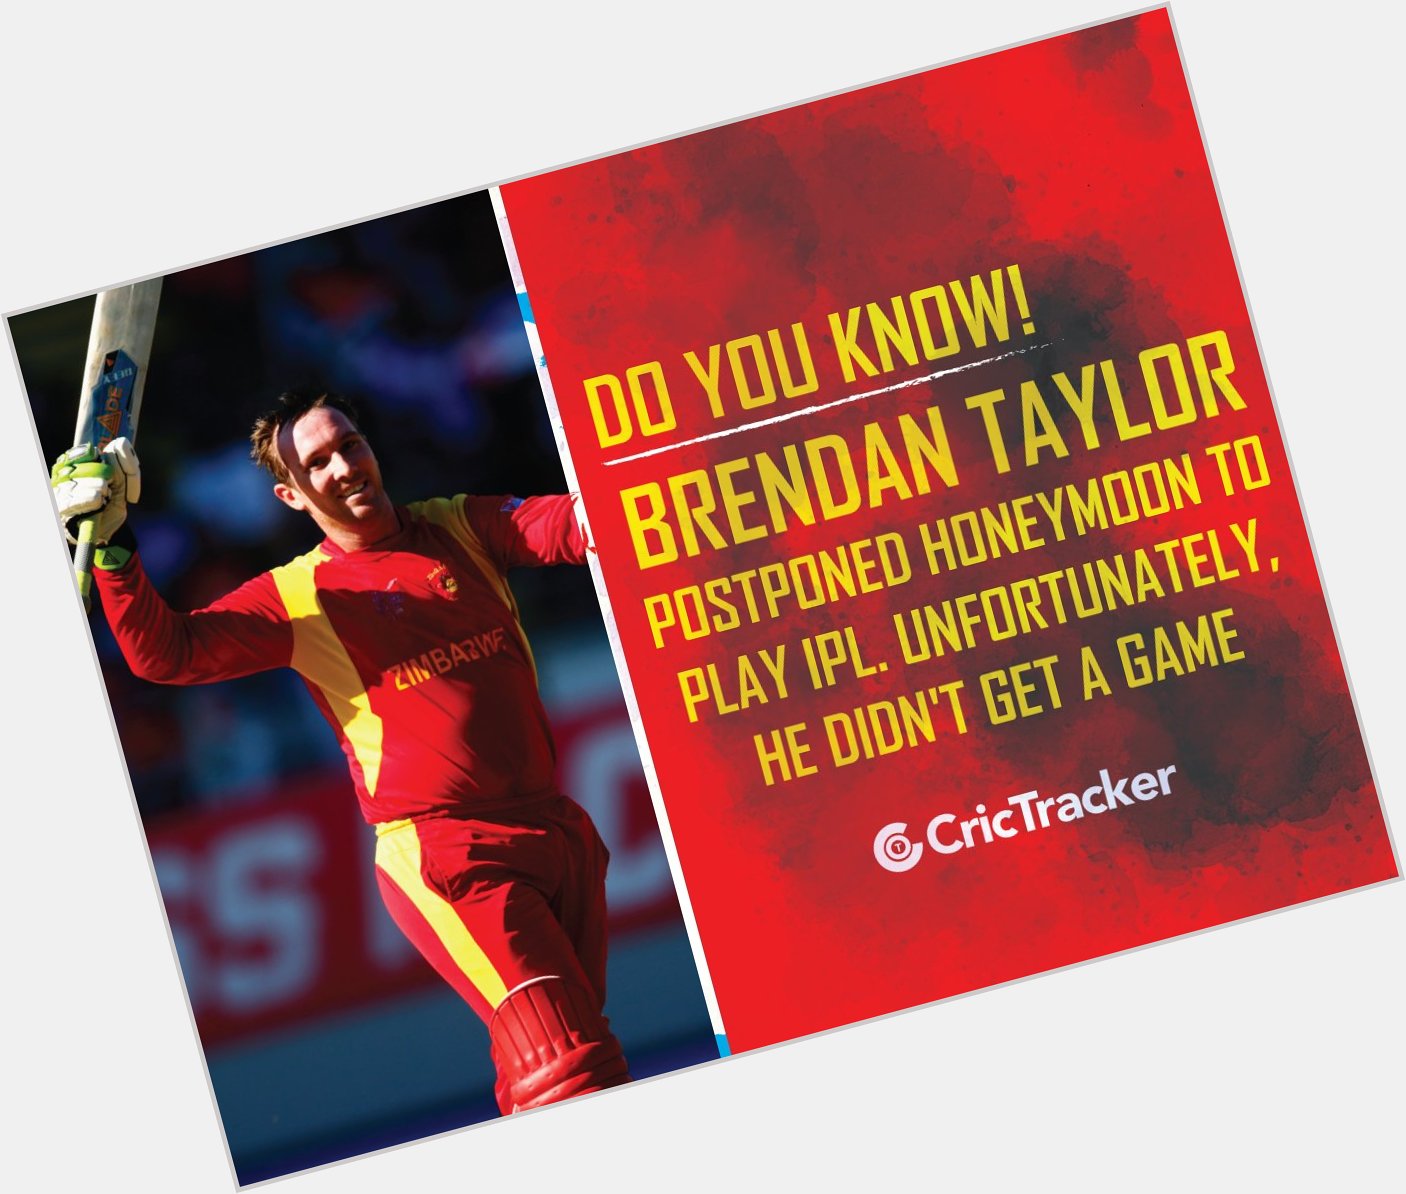 Happy Birthday to the Zimbabwean wicket-keeper Brendan Taylor! 